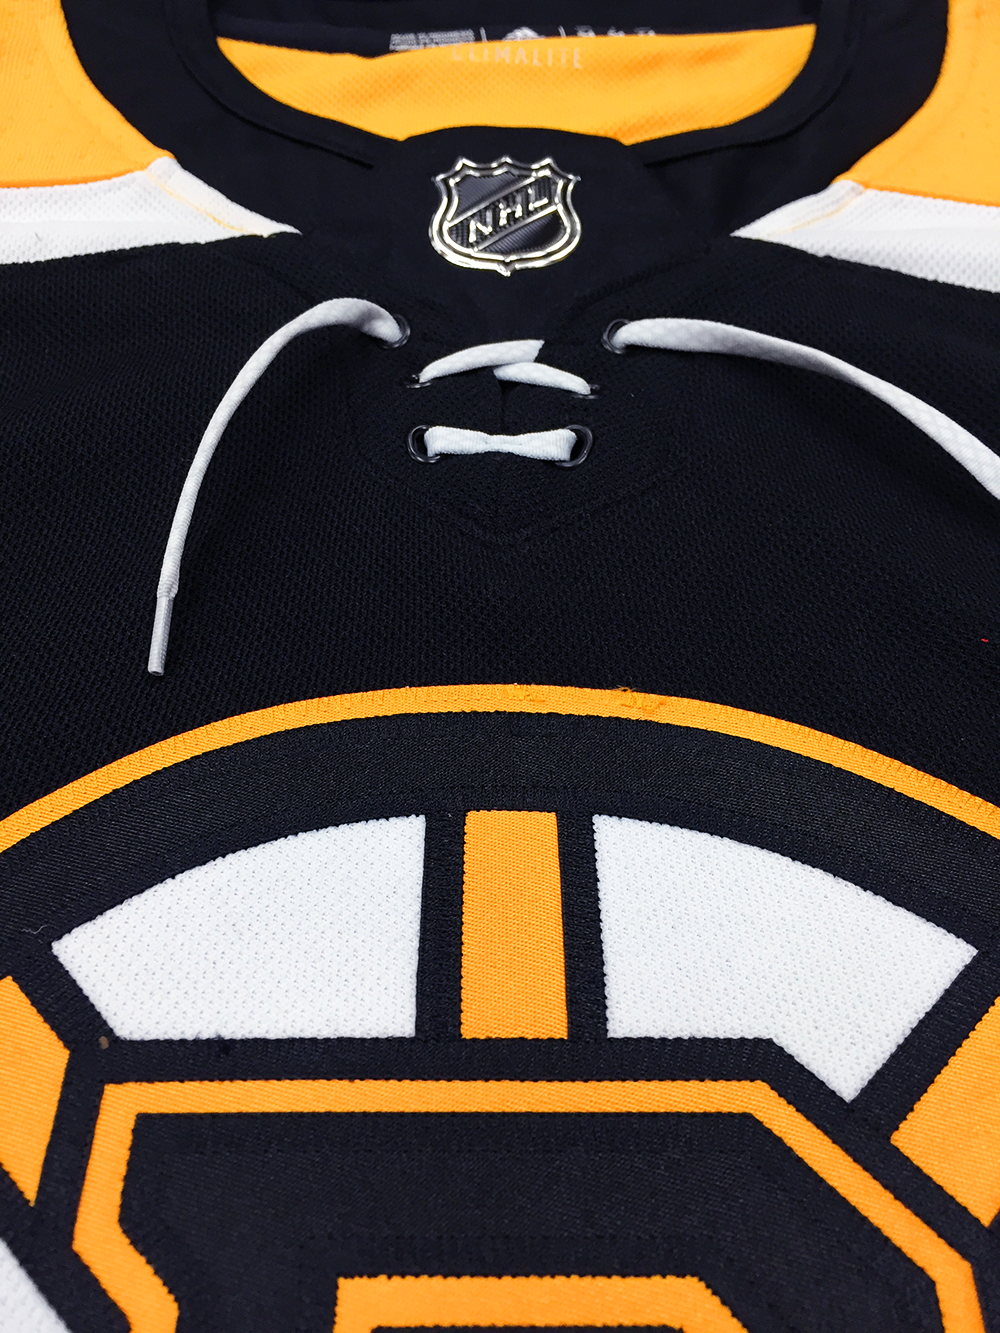 Men's Adidas David Pastrnak Black Boston Bruins Alternate Authentic Player Jersey